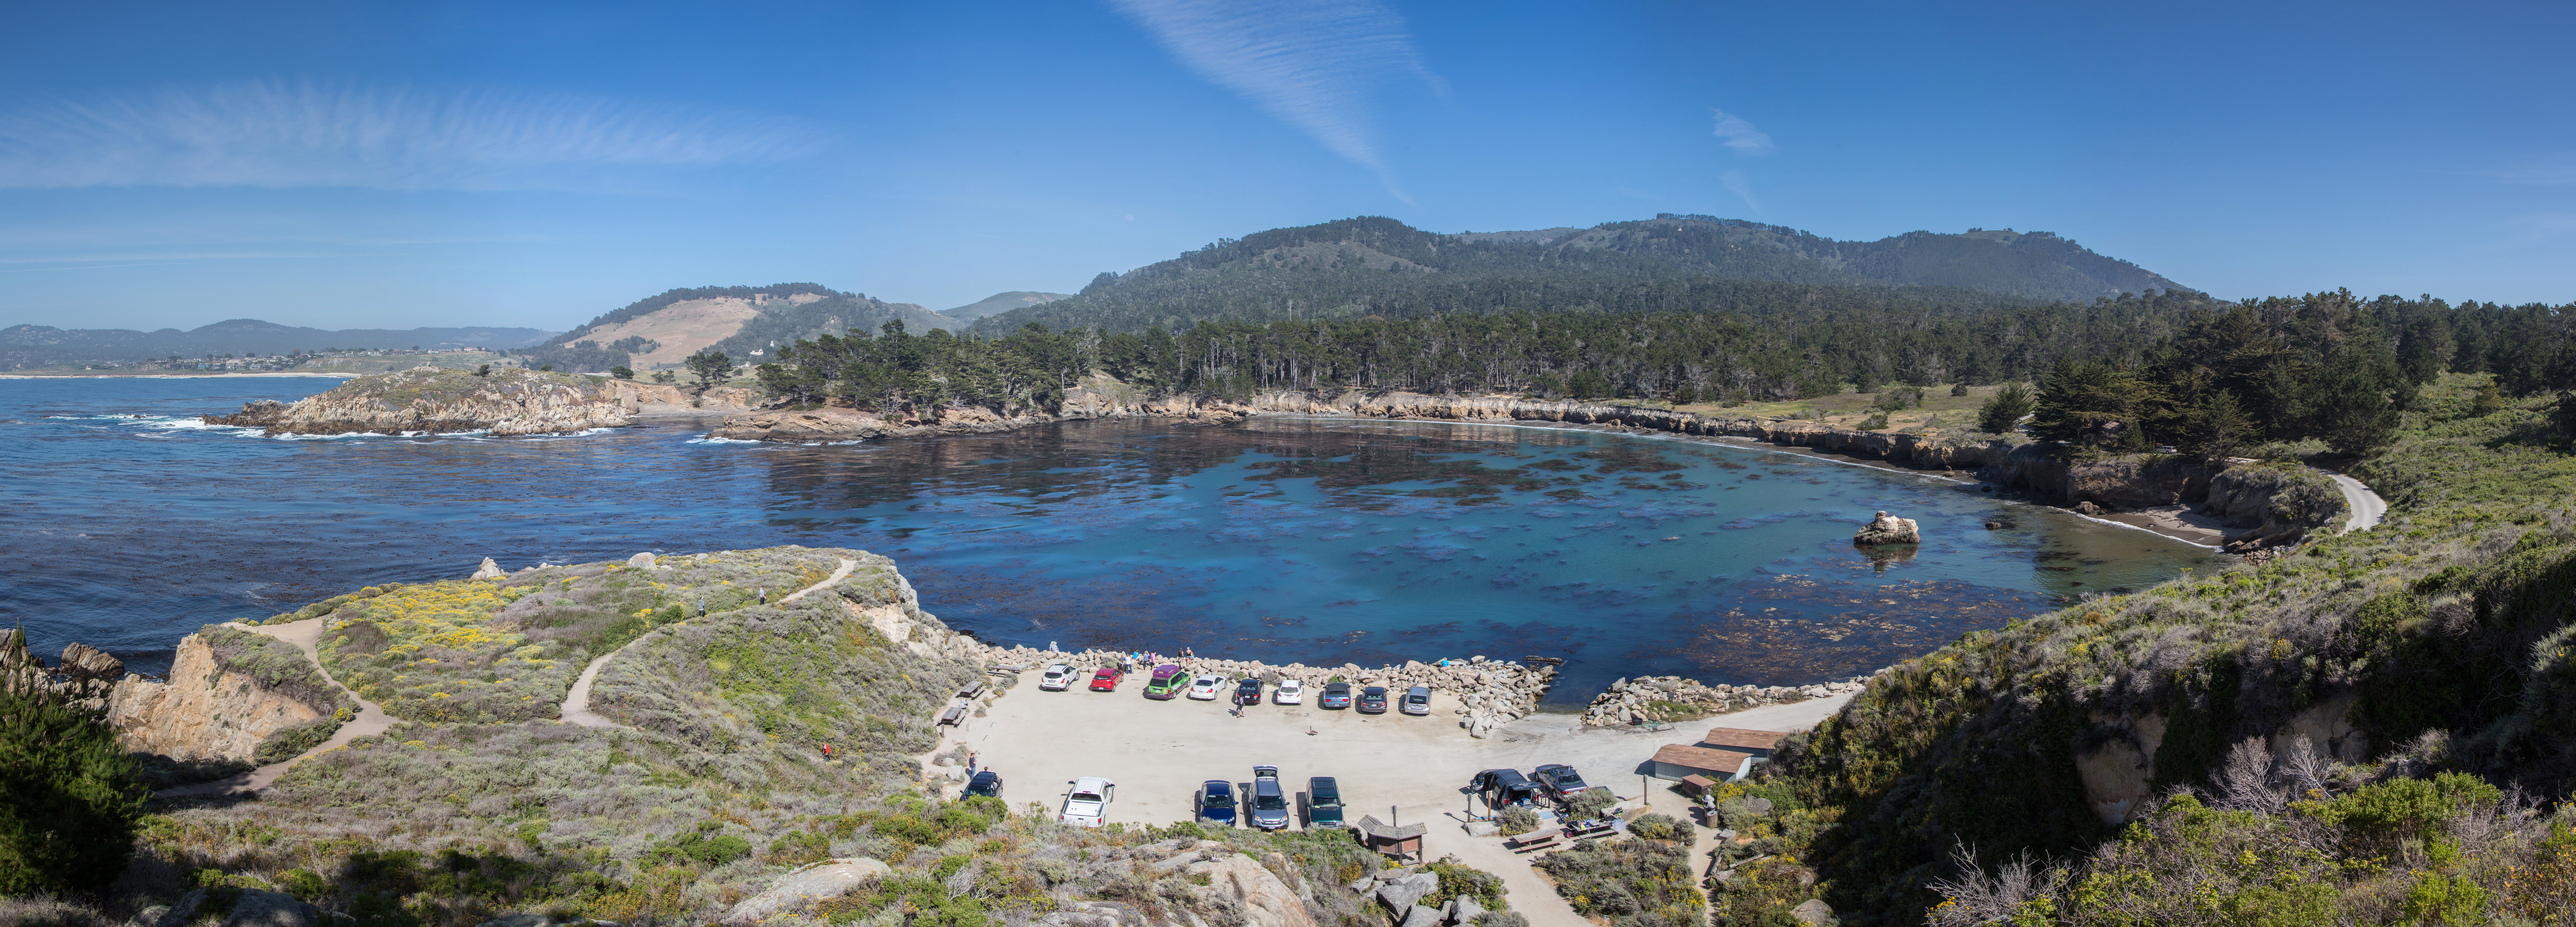 Point Lobos - Wikipedia